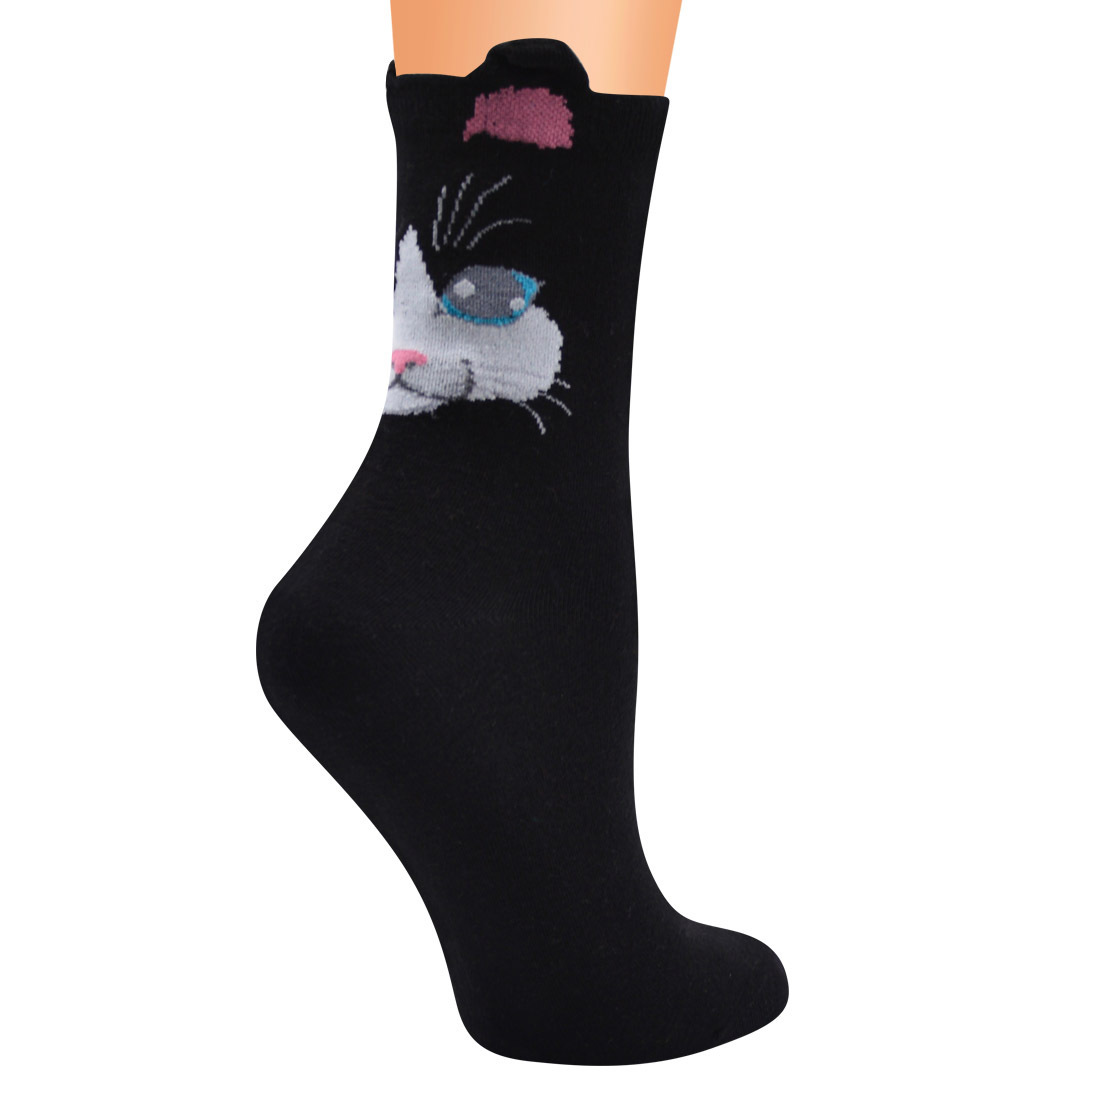 Girls' Black Dance Socks With Kitty Patterns